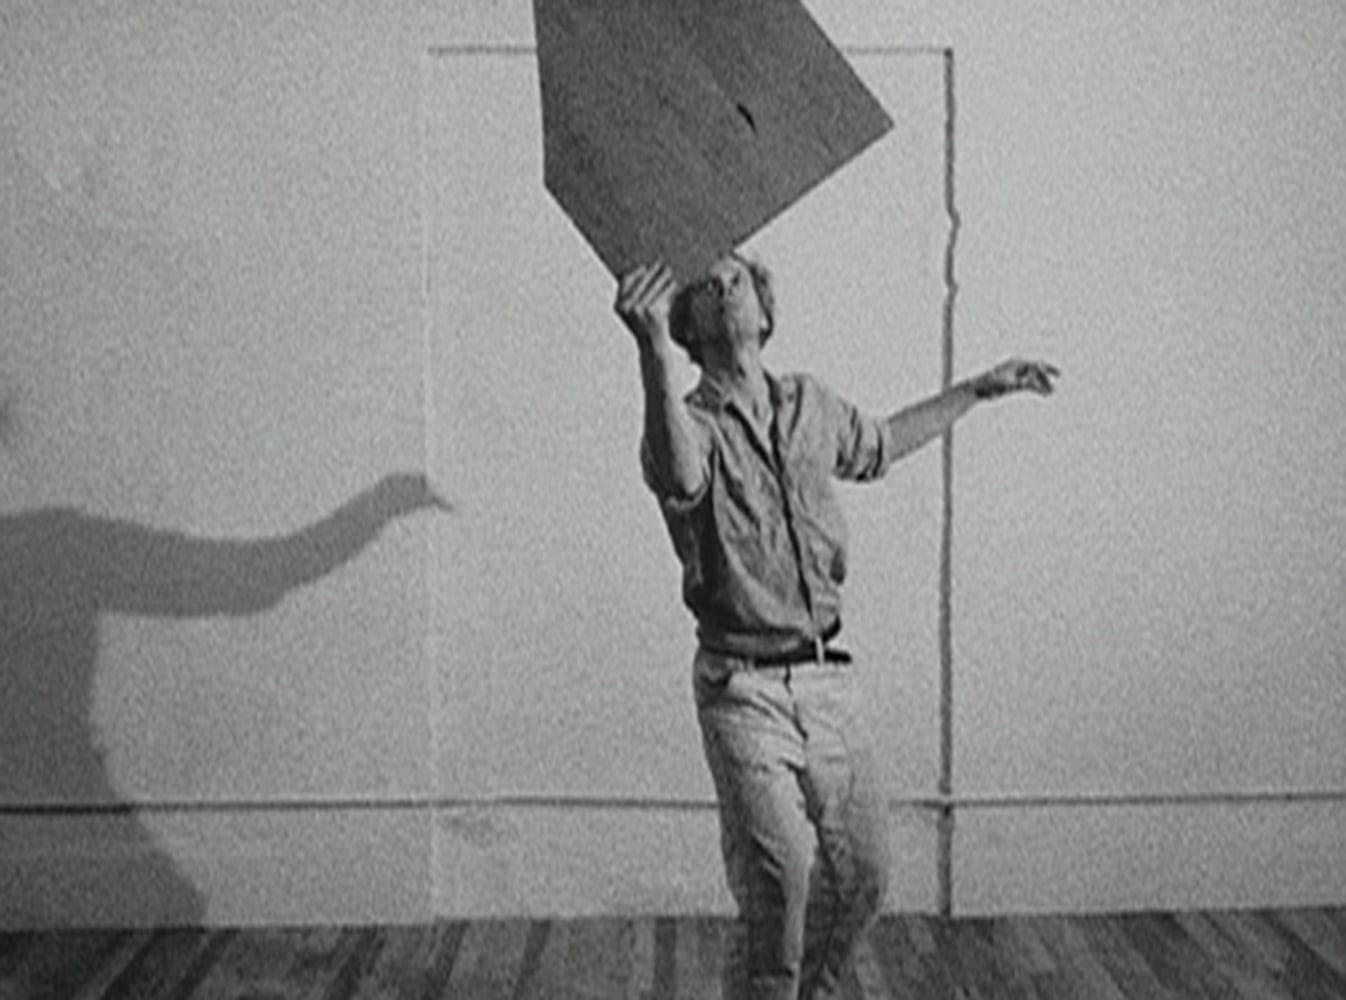 Charles Atlas
Nevada, 1974
Film/dance
Super-8mm film
Silent
2 minutes 53 seconds